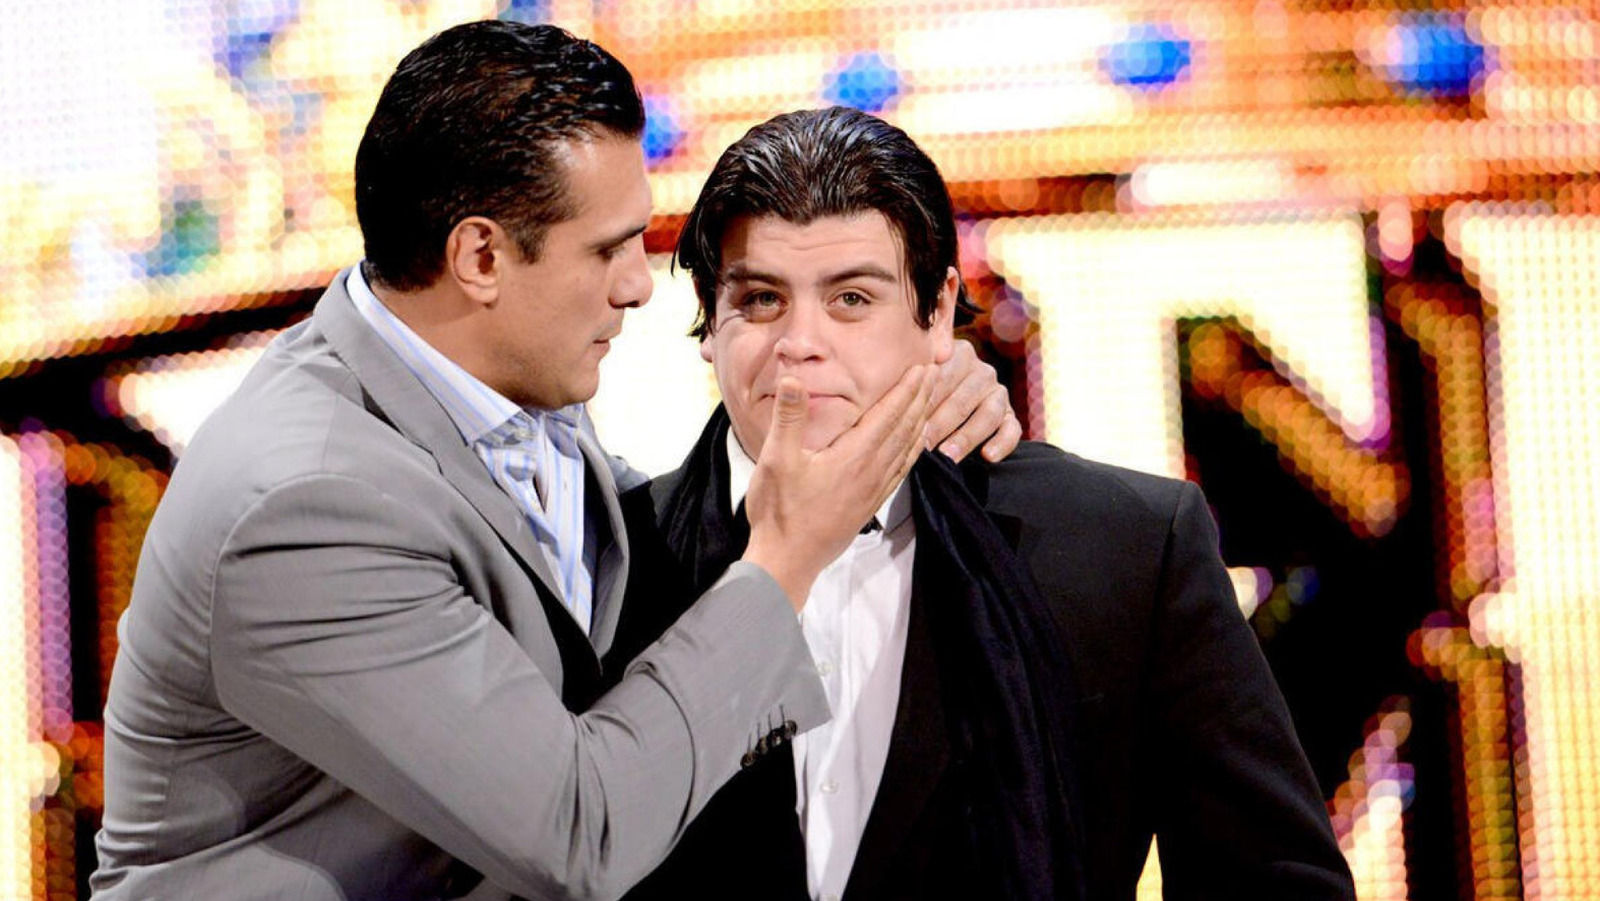 Ricardo Rodriguez Recalls How He Got His Start In WWE